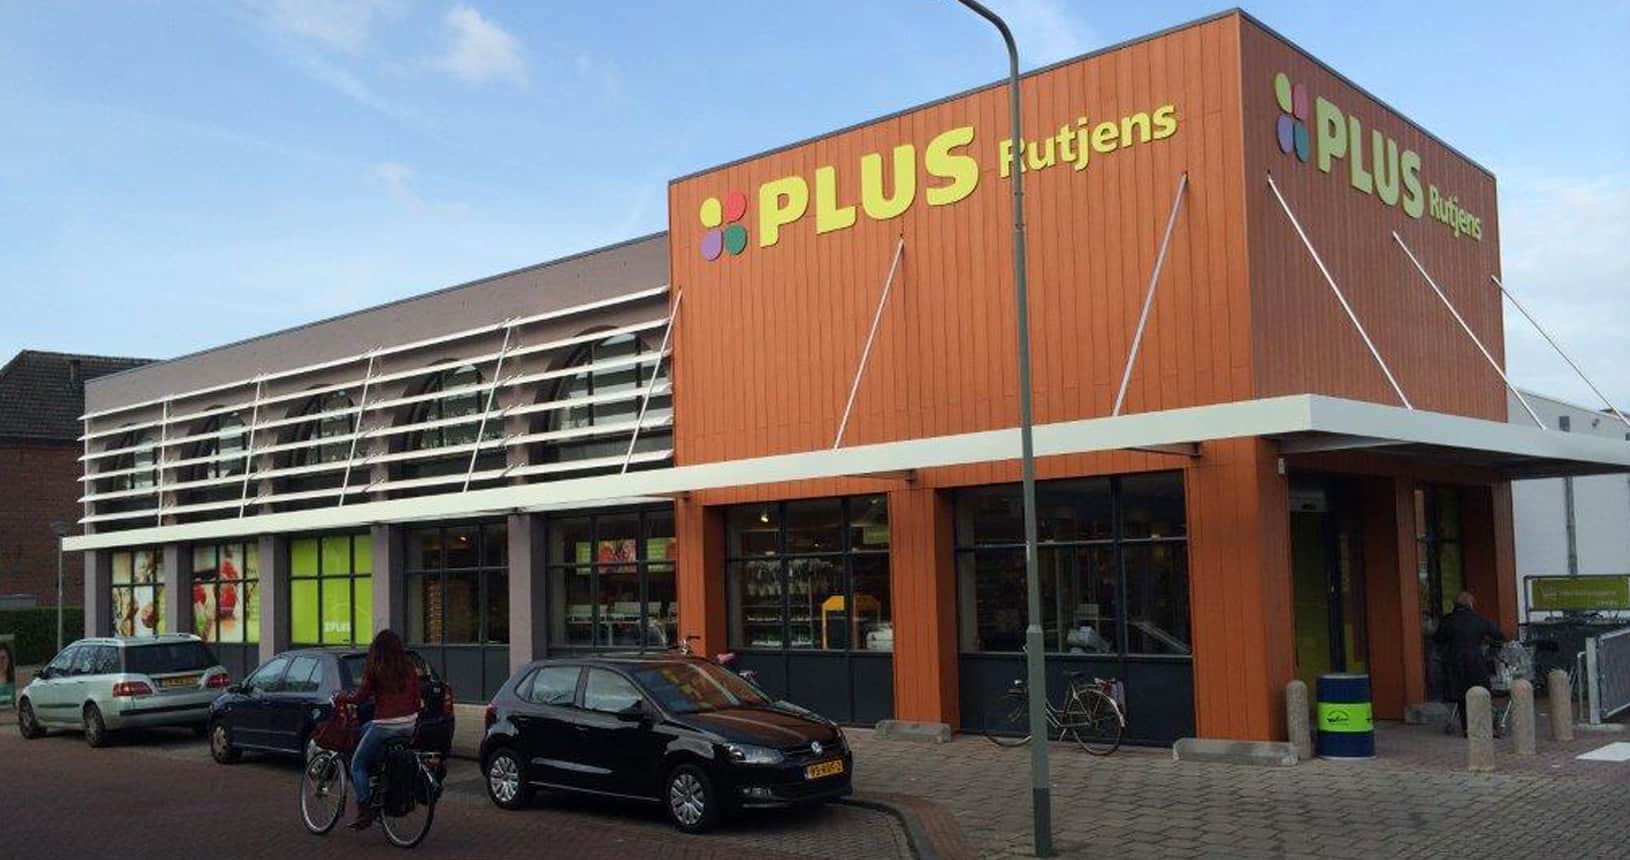 Plus supermarkt, Roermond – Maasniel